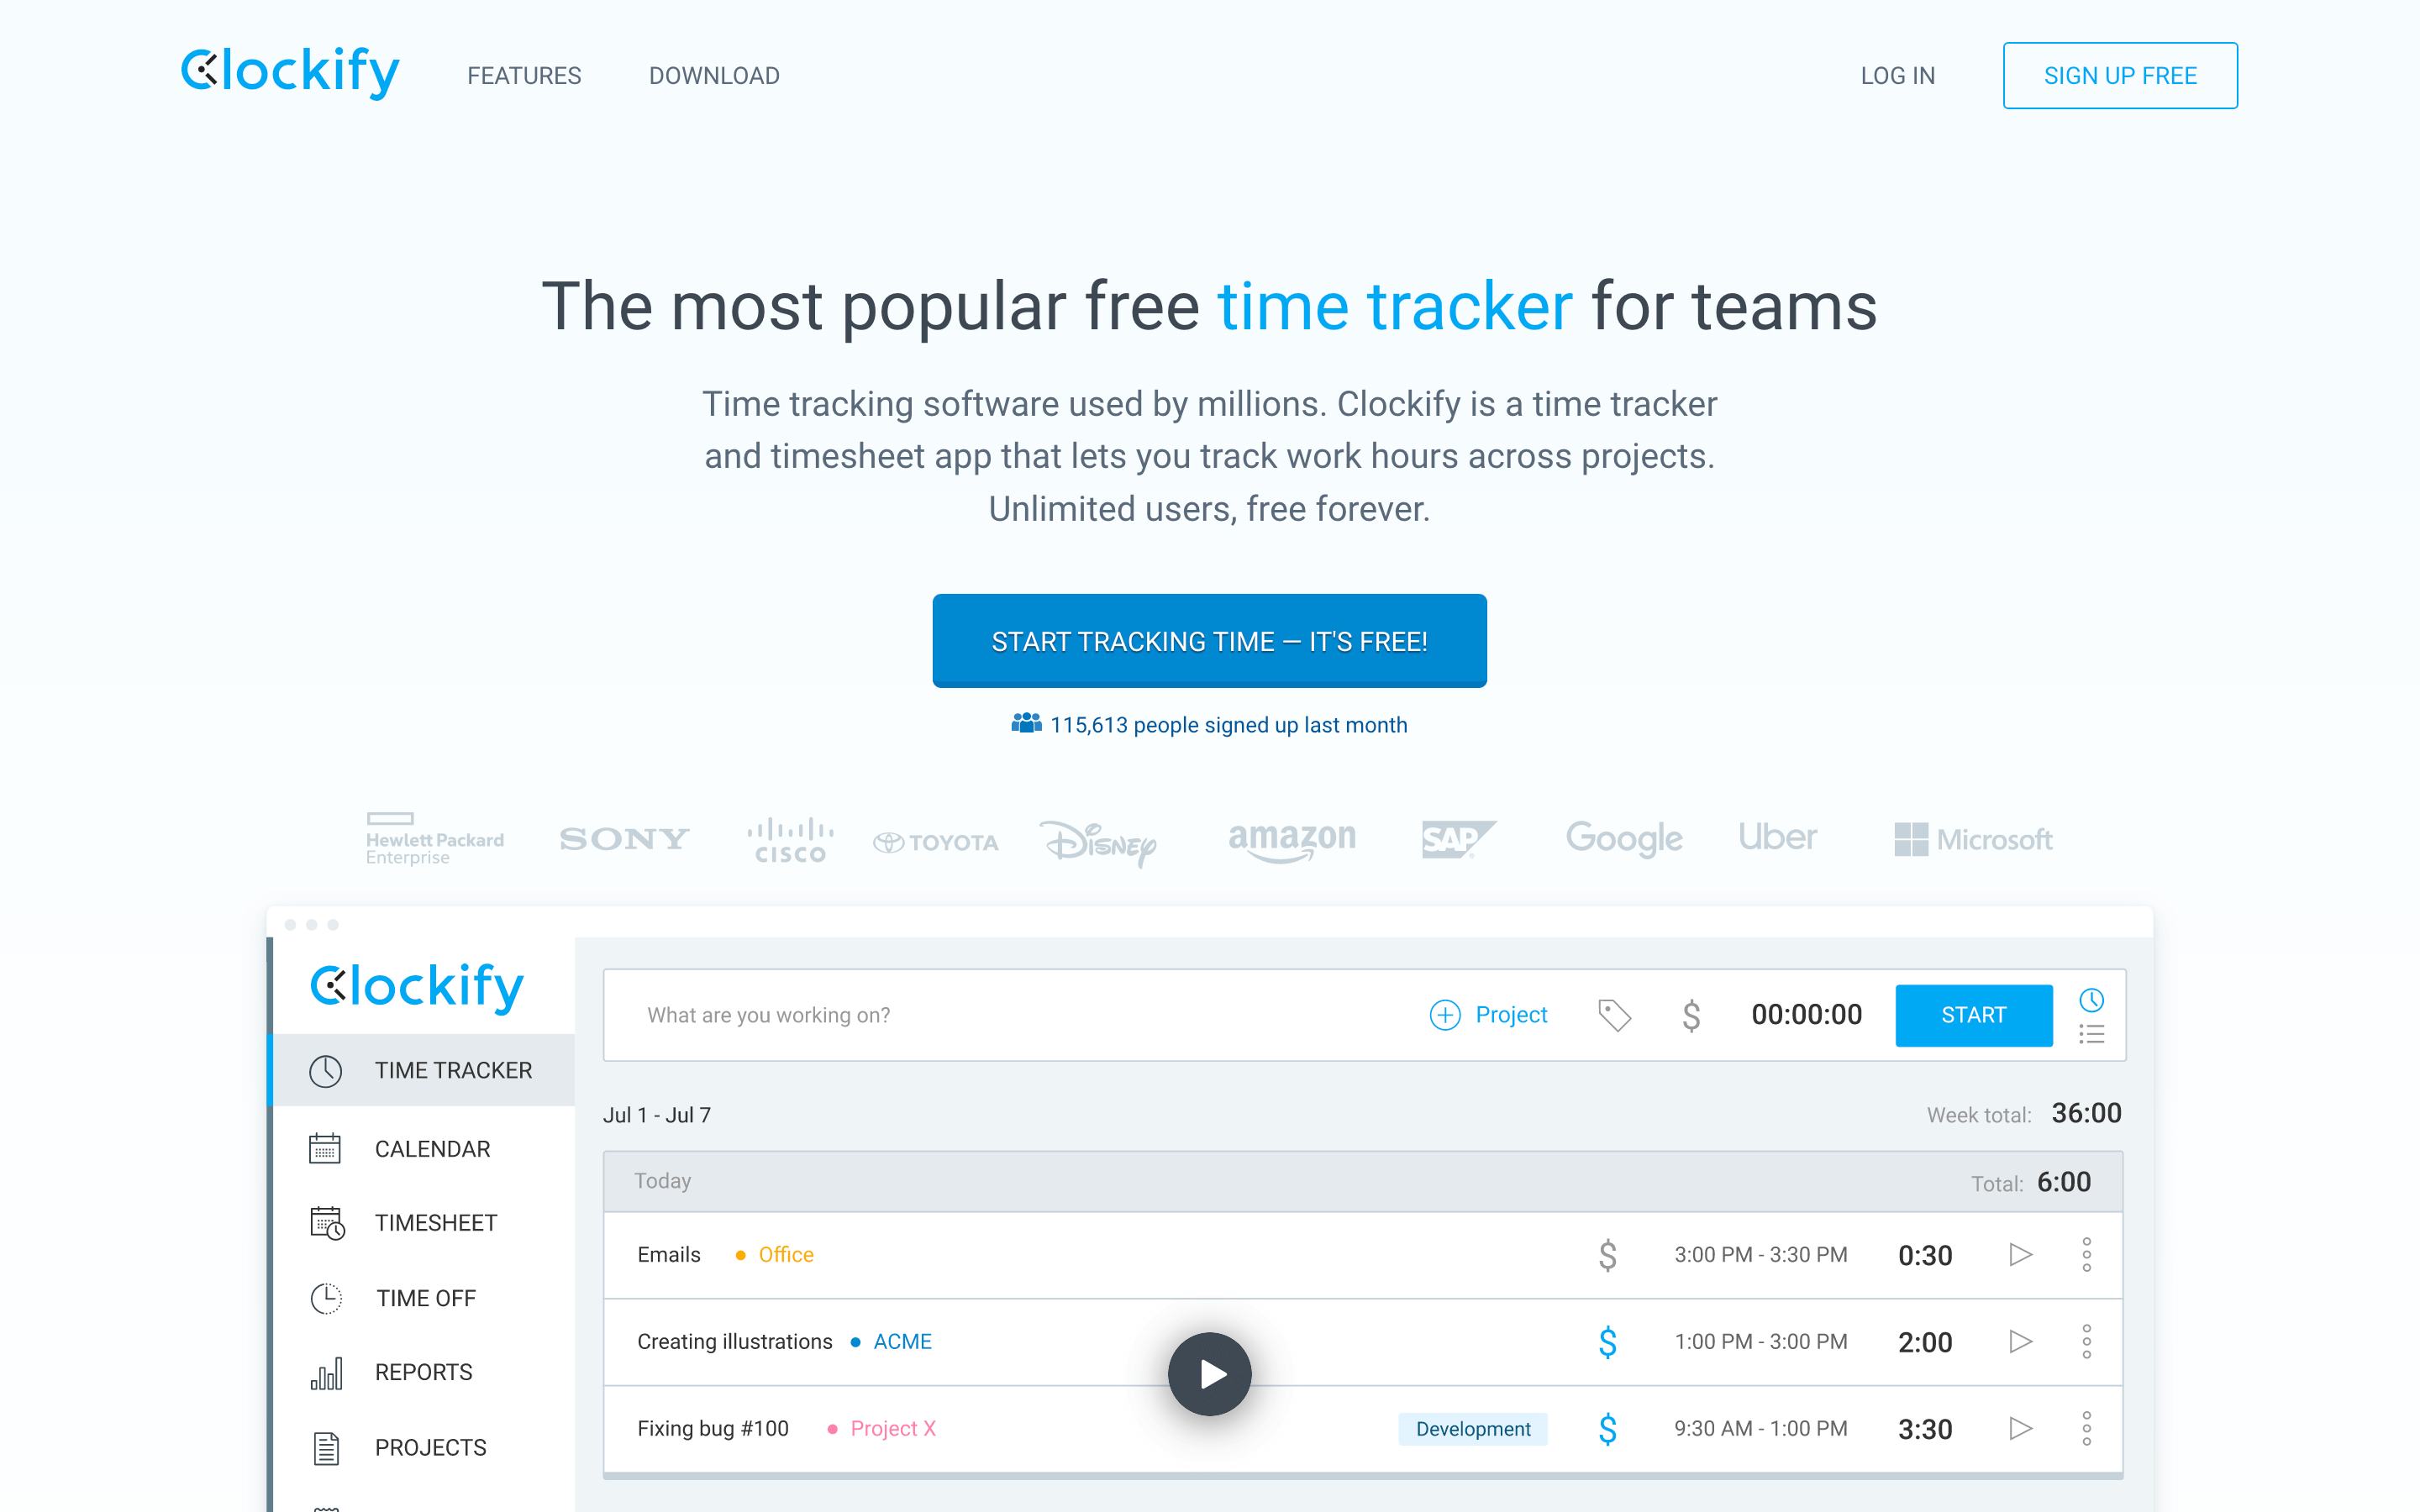 Clockify home page